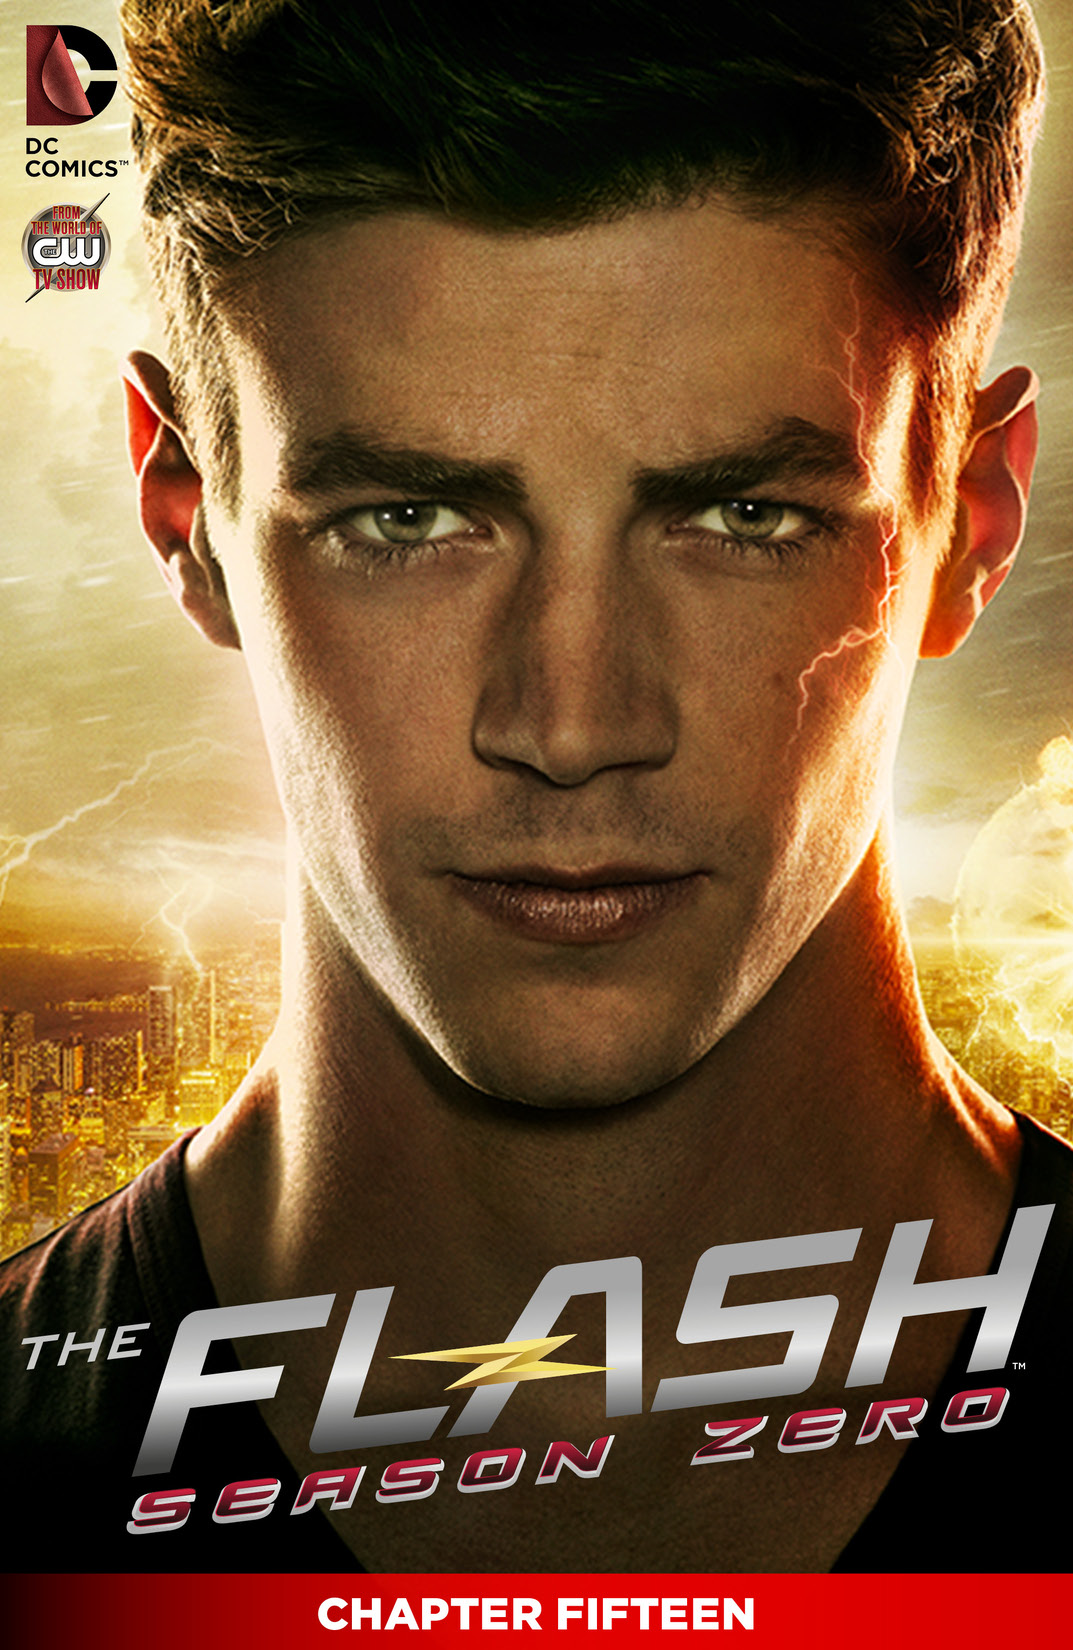 The Flash: Season Zero #15 preview images